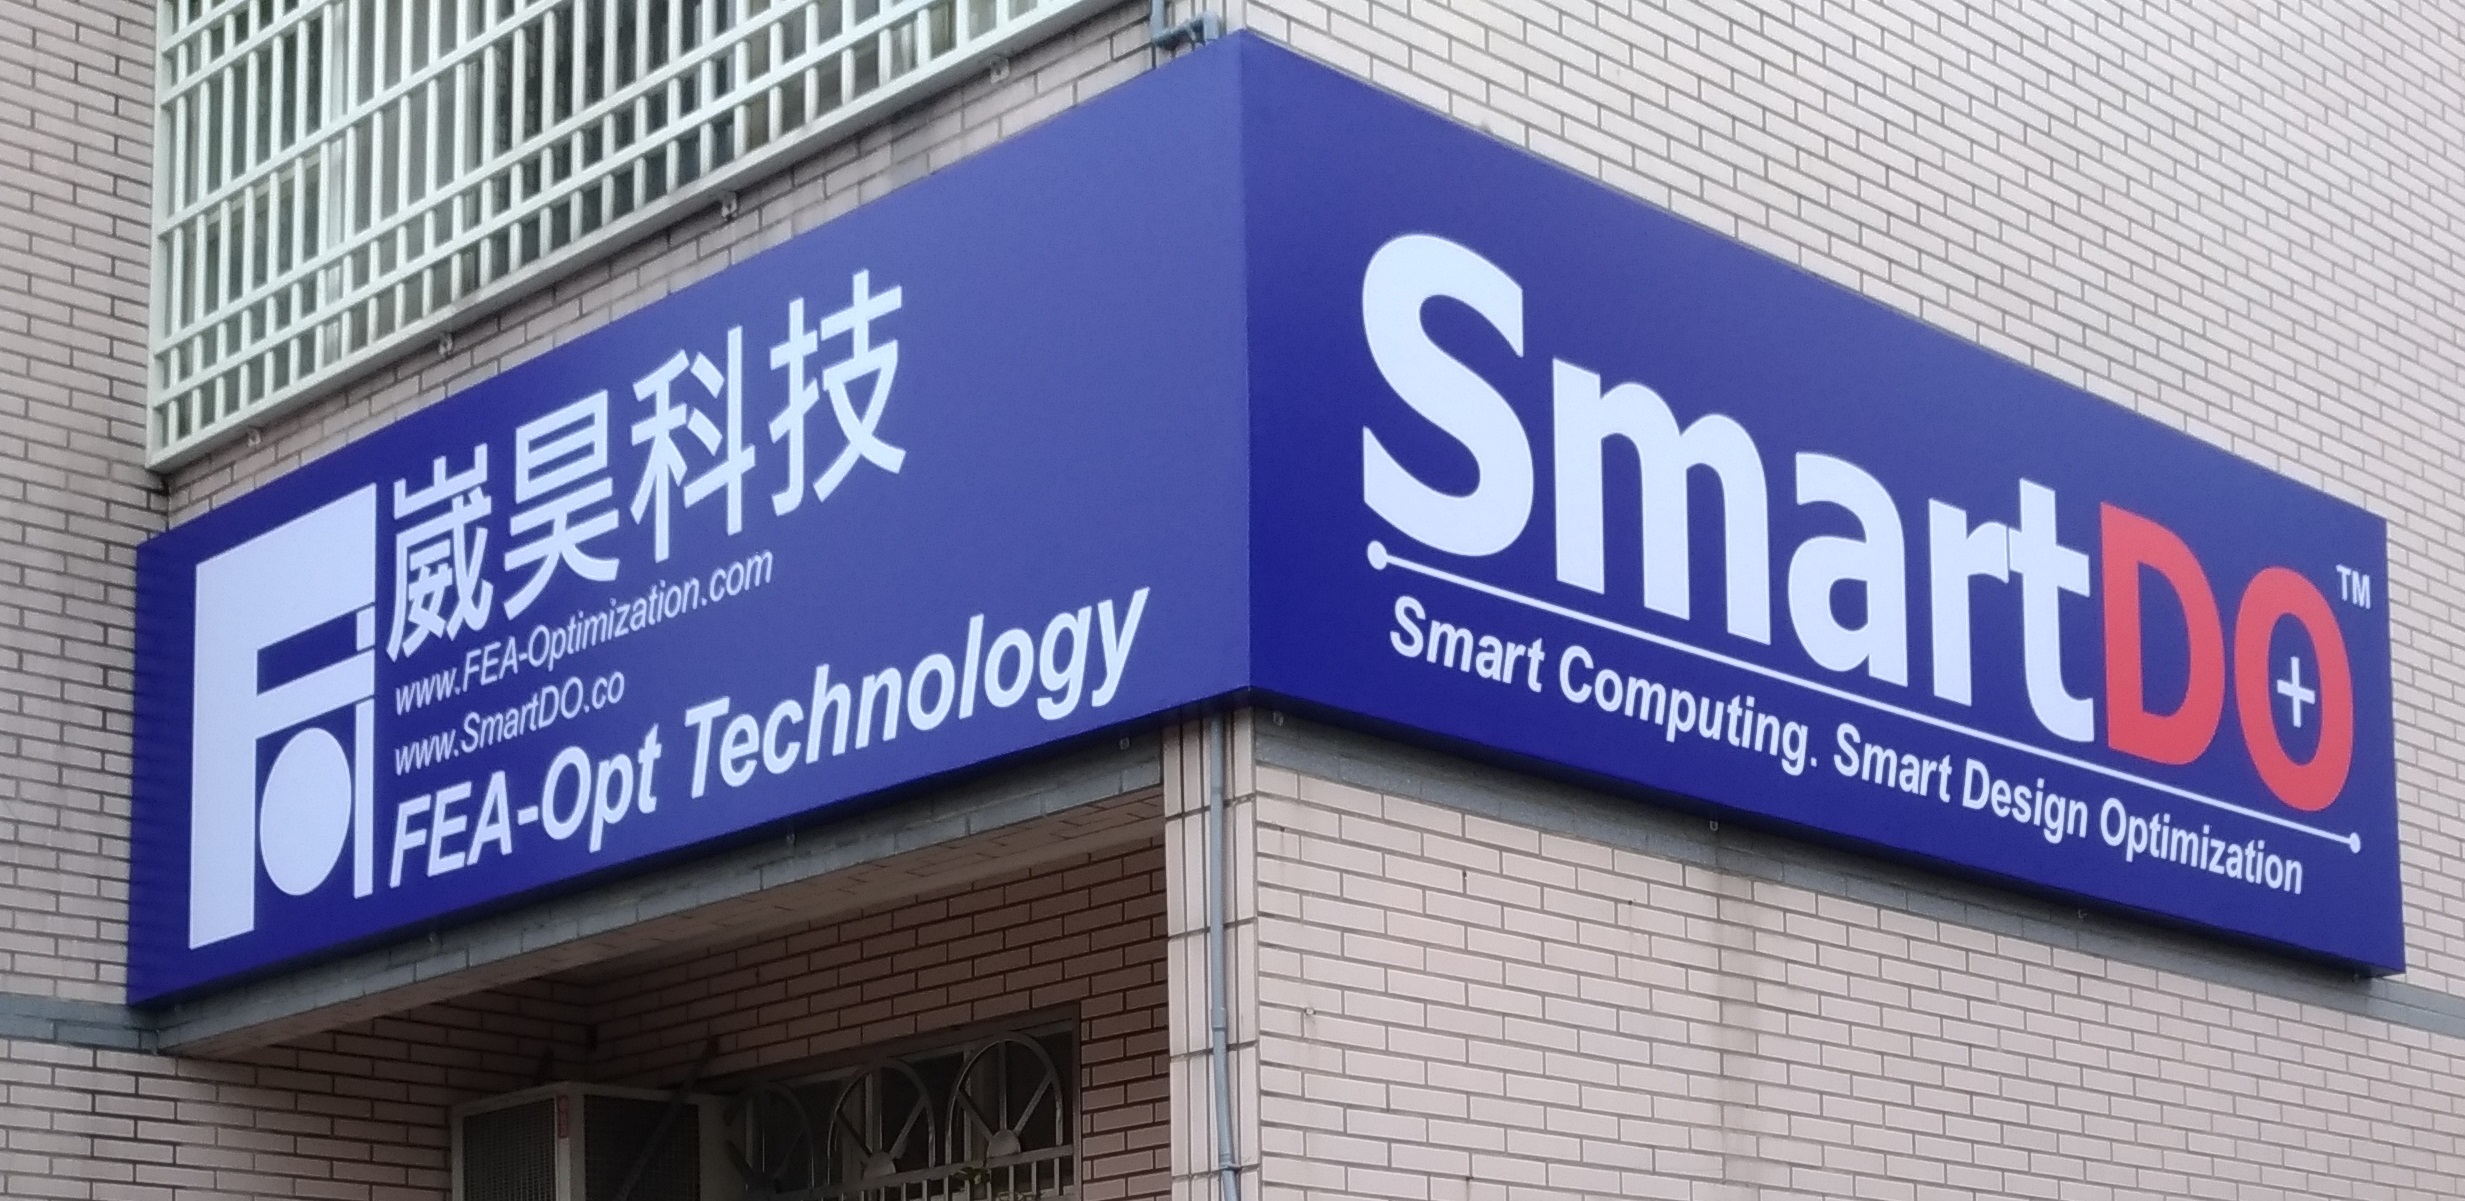 SmartDO and FEA-Opt Technology Logo